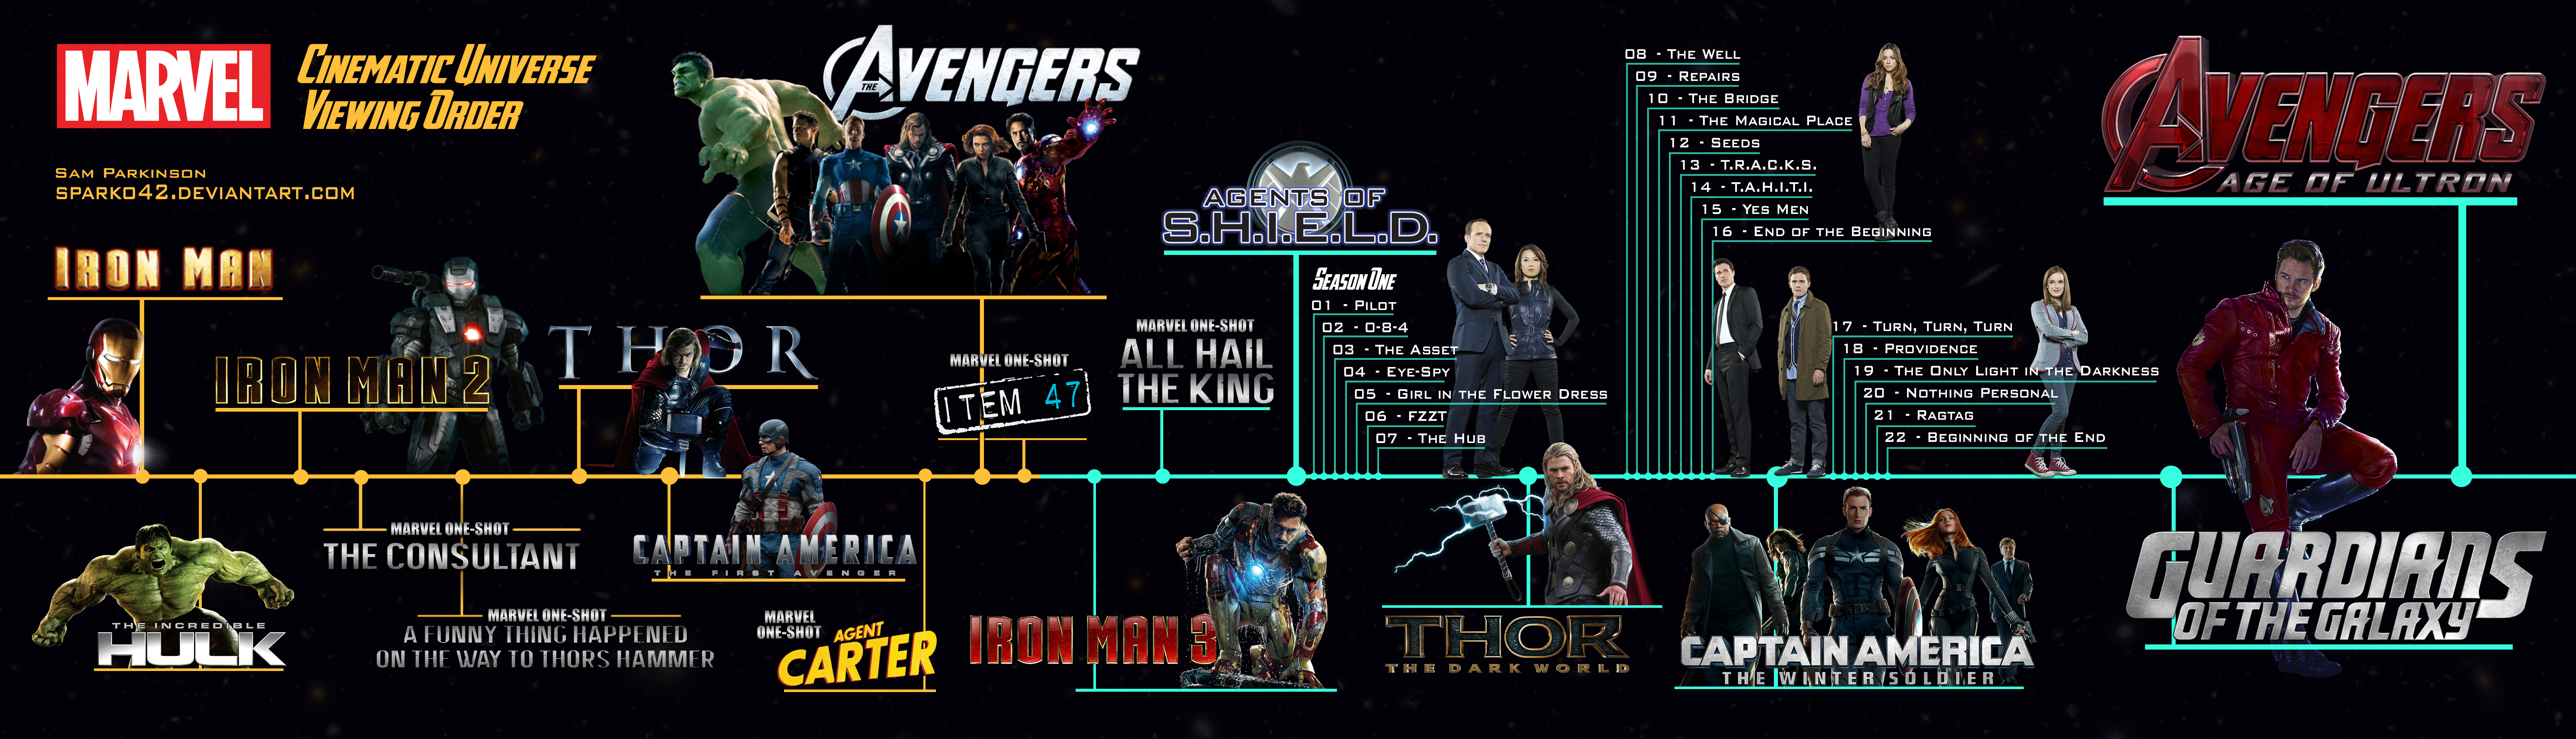 Marvel Cinematic Universe (saga) Marvel_cinematic_universe___viewing_order_timeline_by_sparko42-d7hccgs